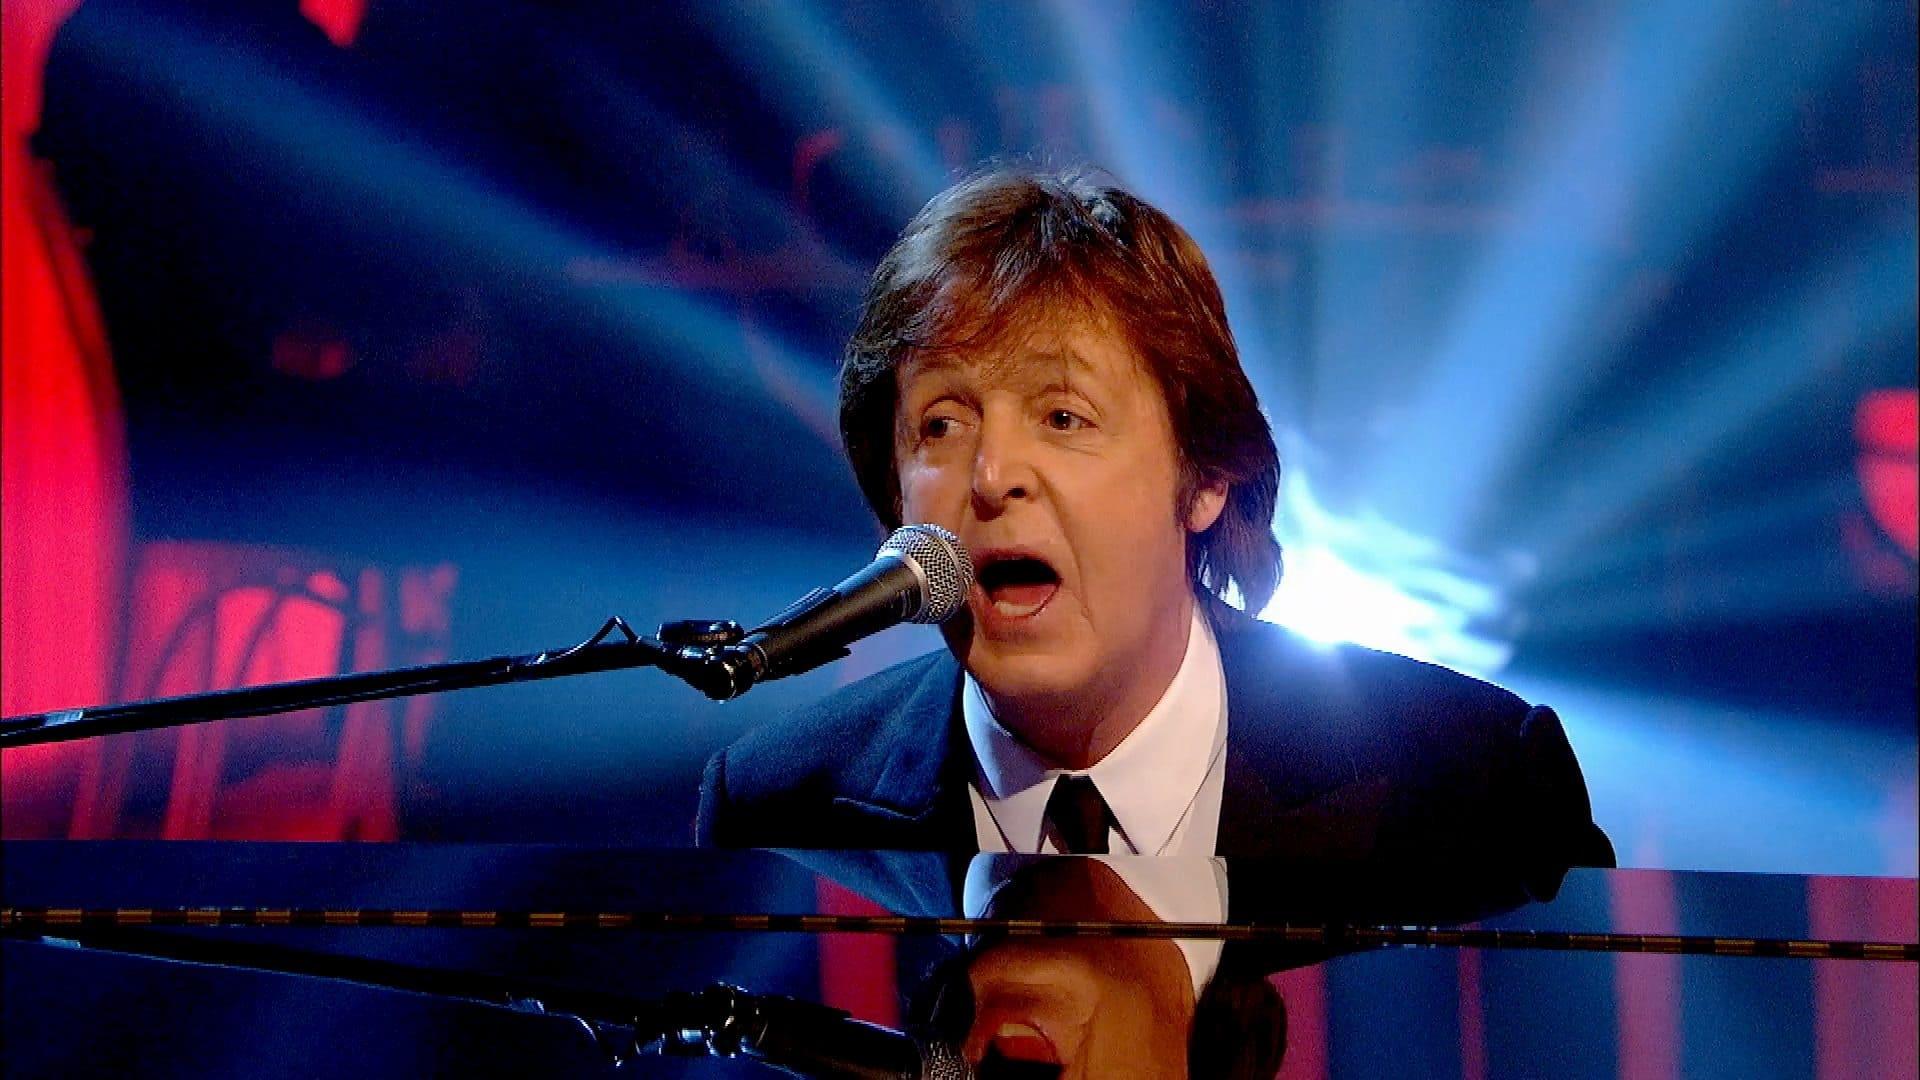 Paul McCartney At The BBC backdrop